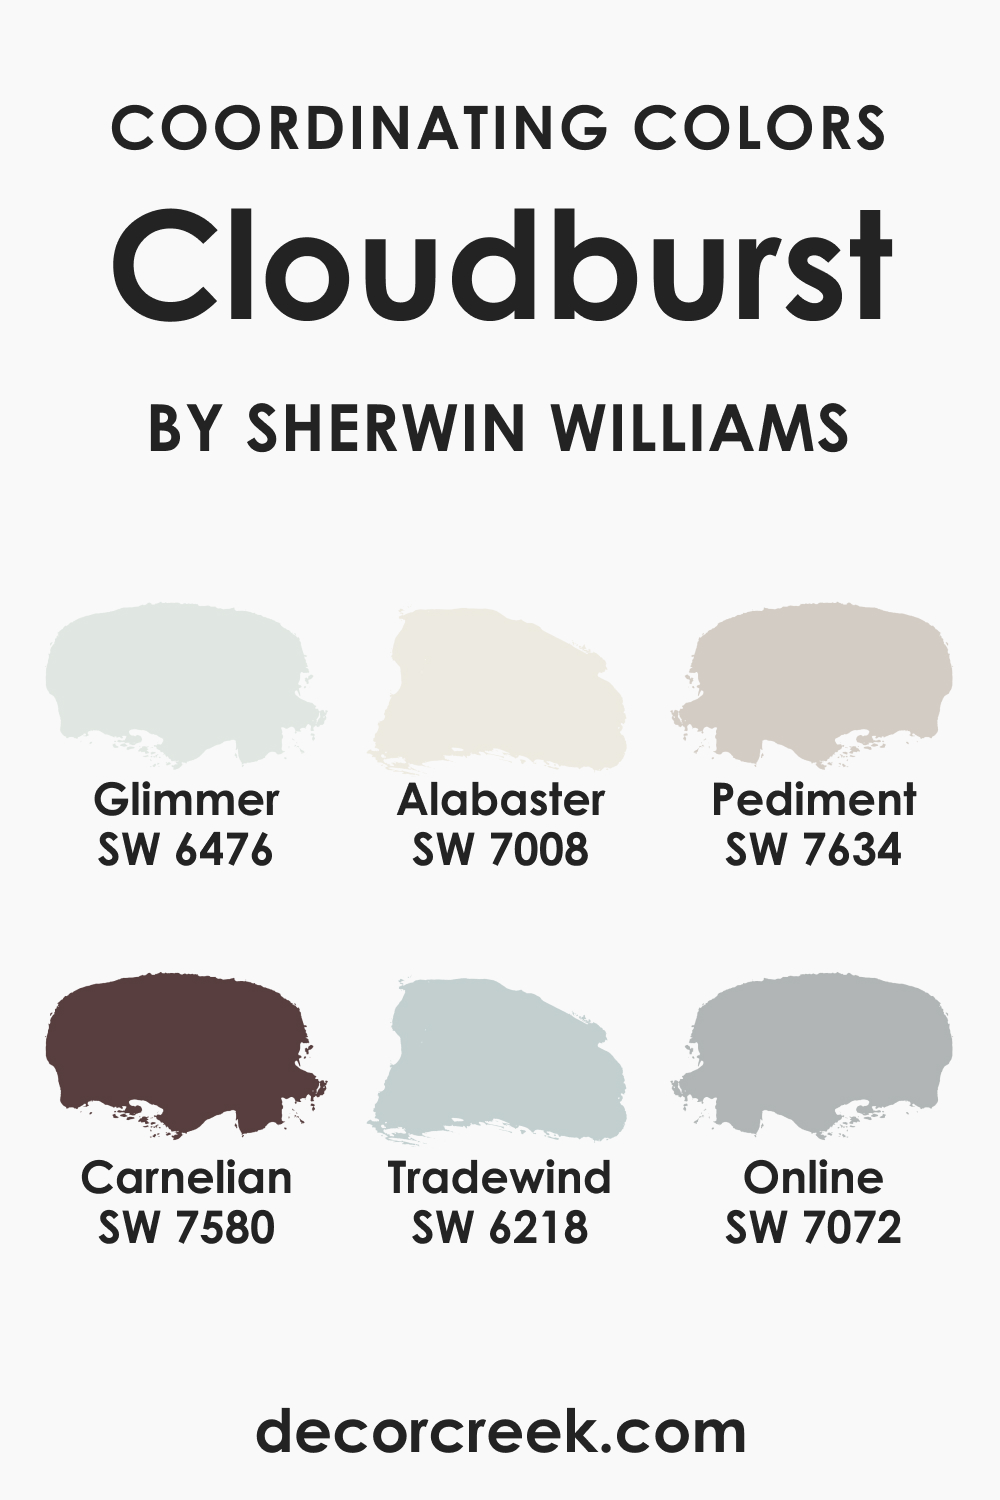 Coordinating Colors of SW 6487 Cloudburst